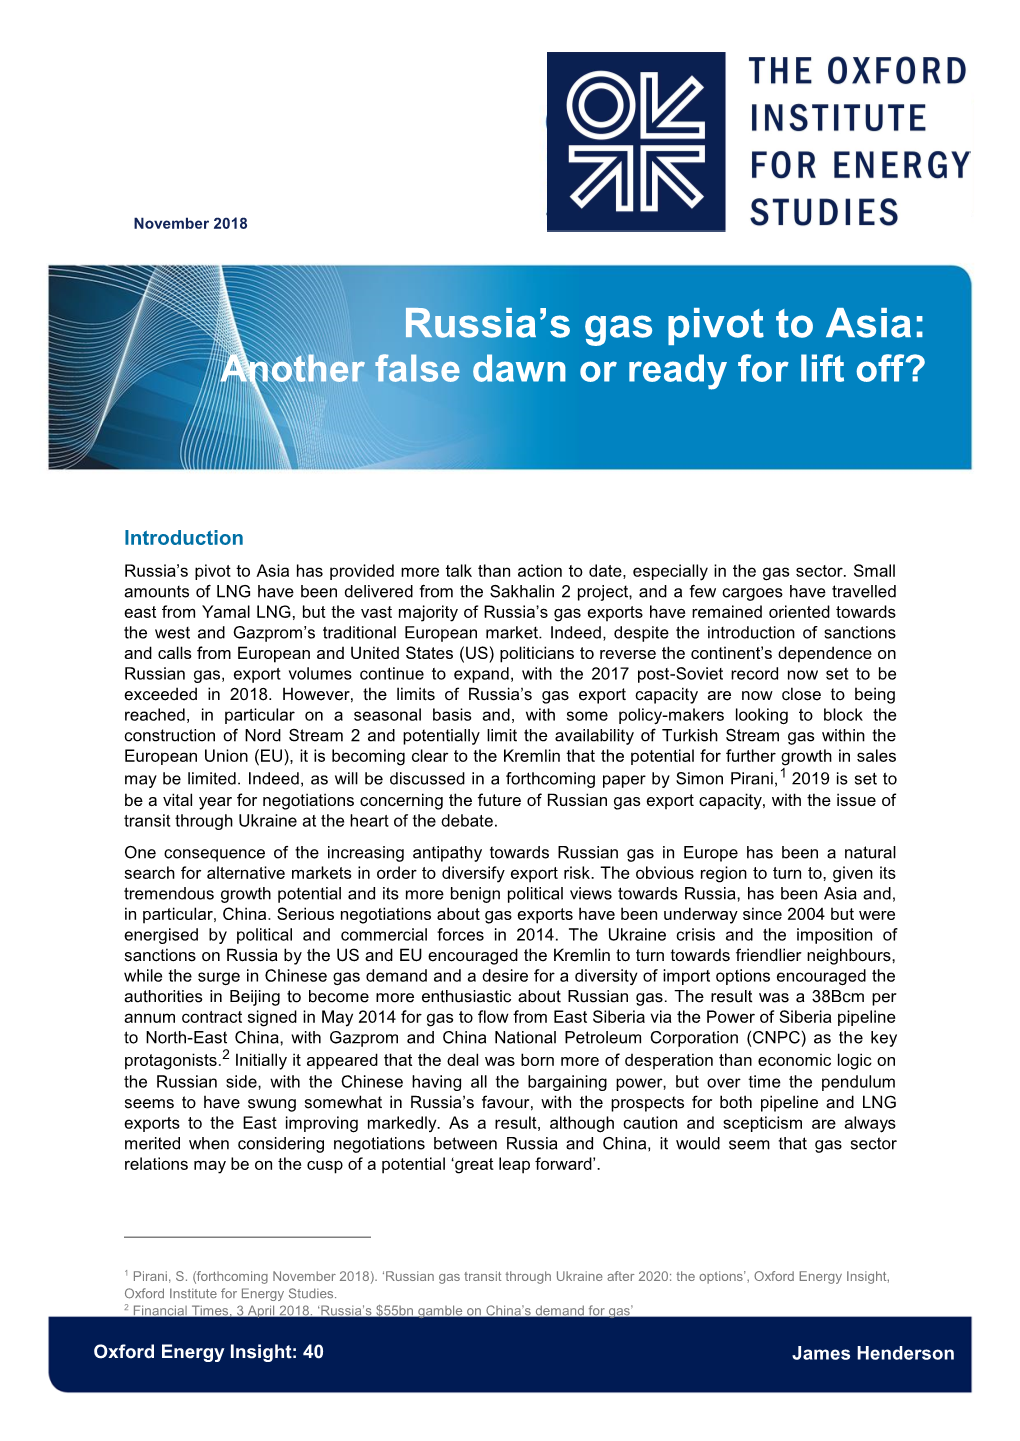 Russia's Gas Pivot to Asia